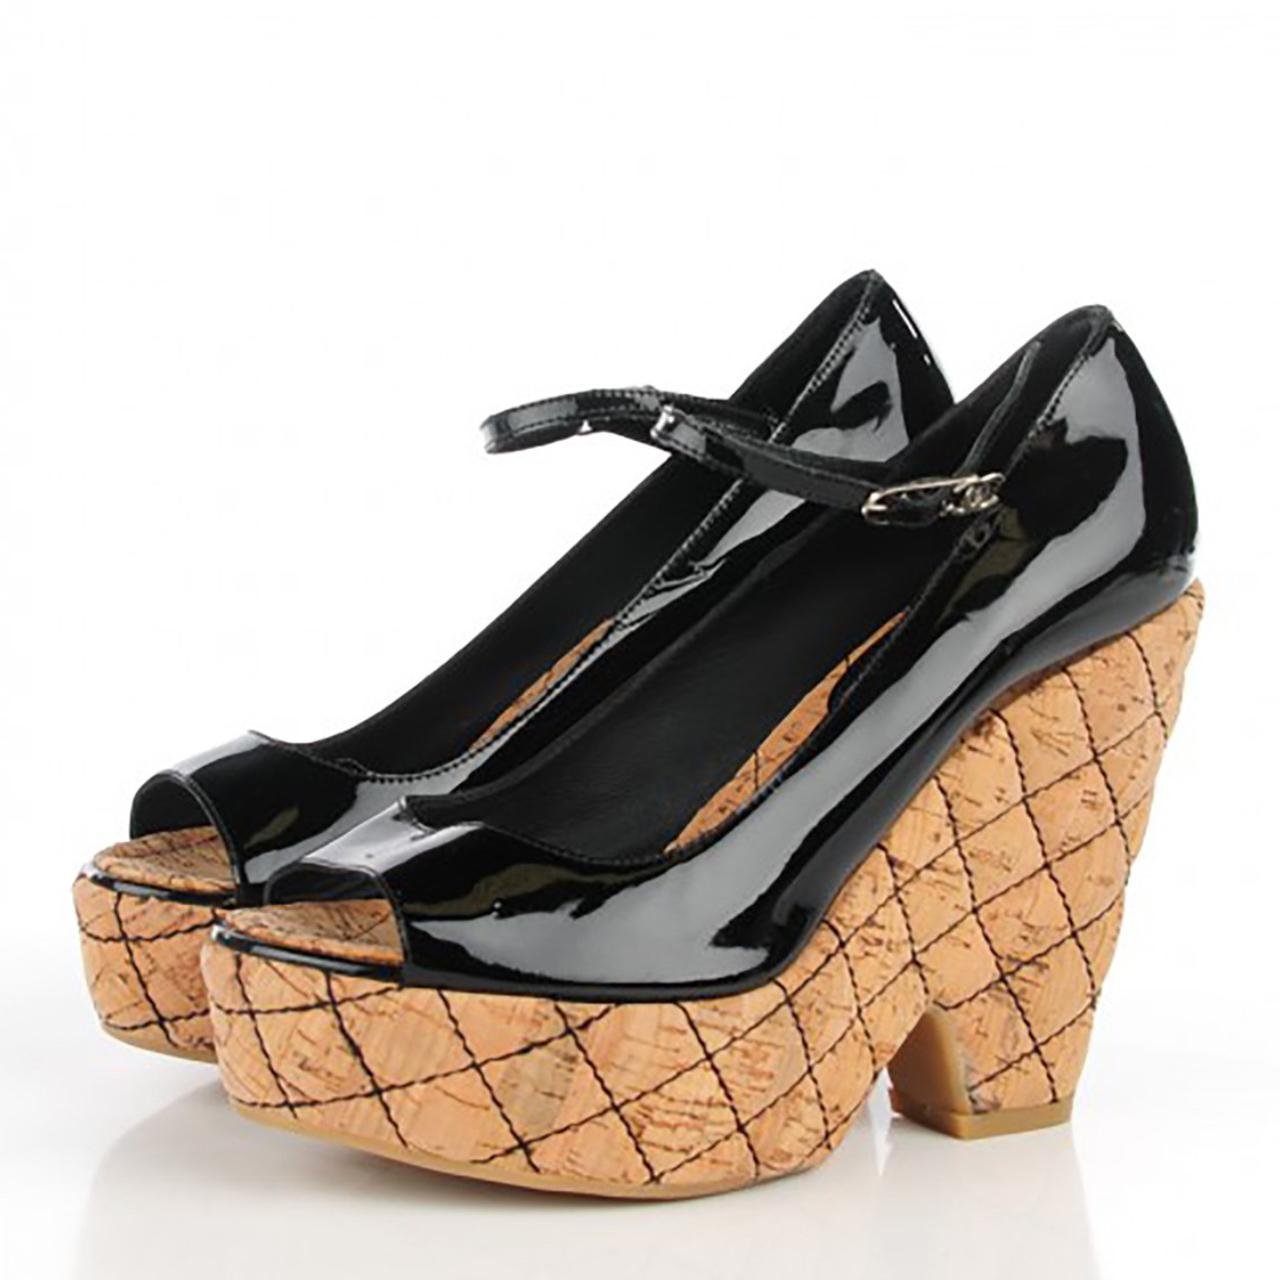 CHANEL 20C Tweed Leather Chain CC Raffia Platform Wedge Heel Sandals Shoes  $1175